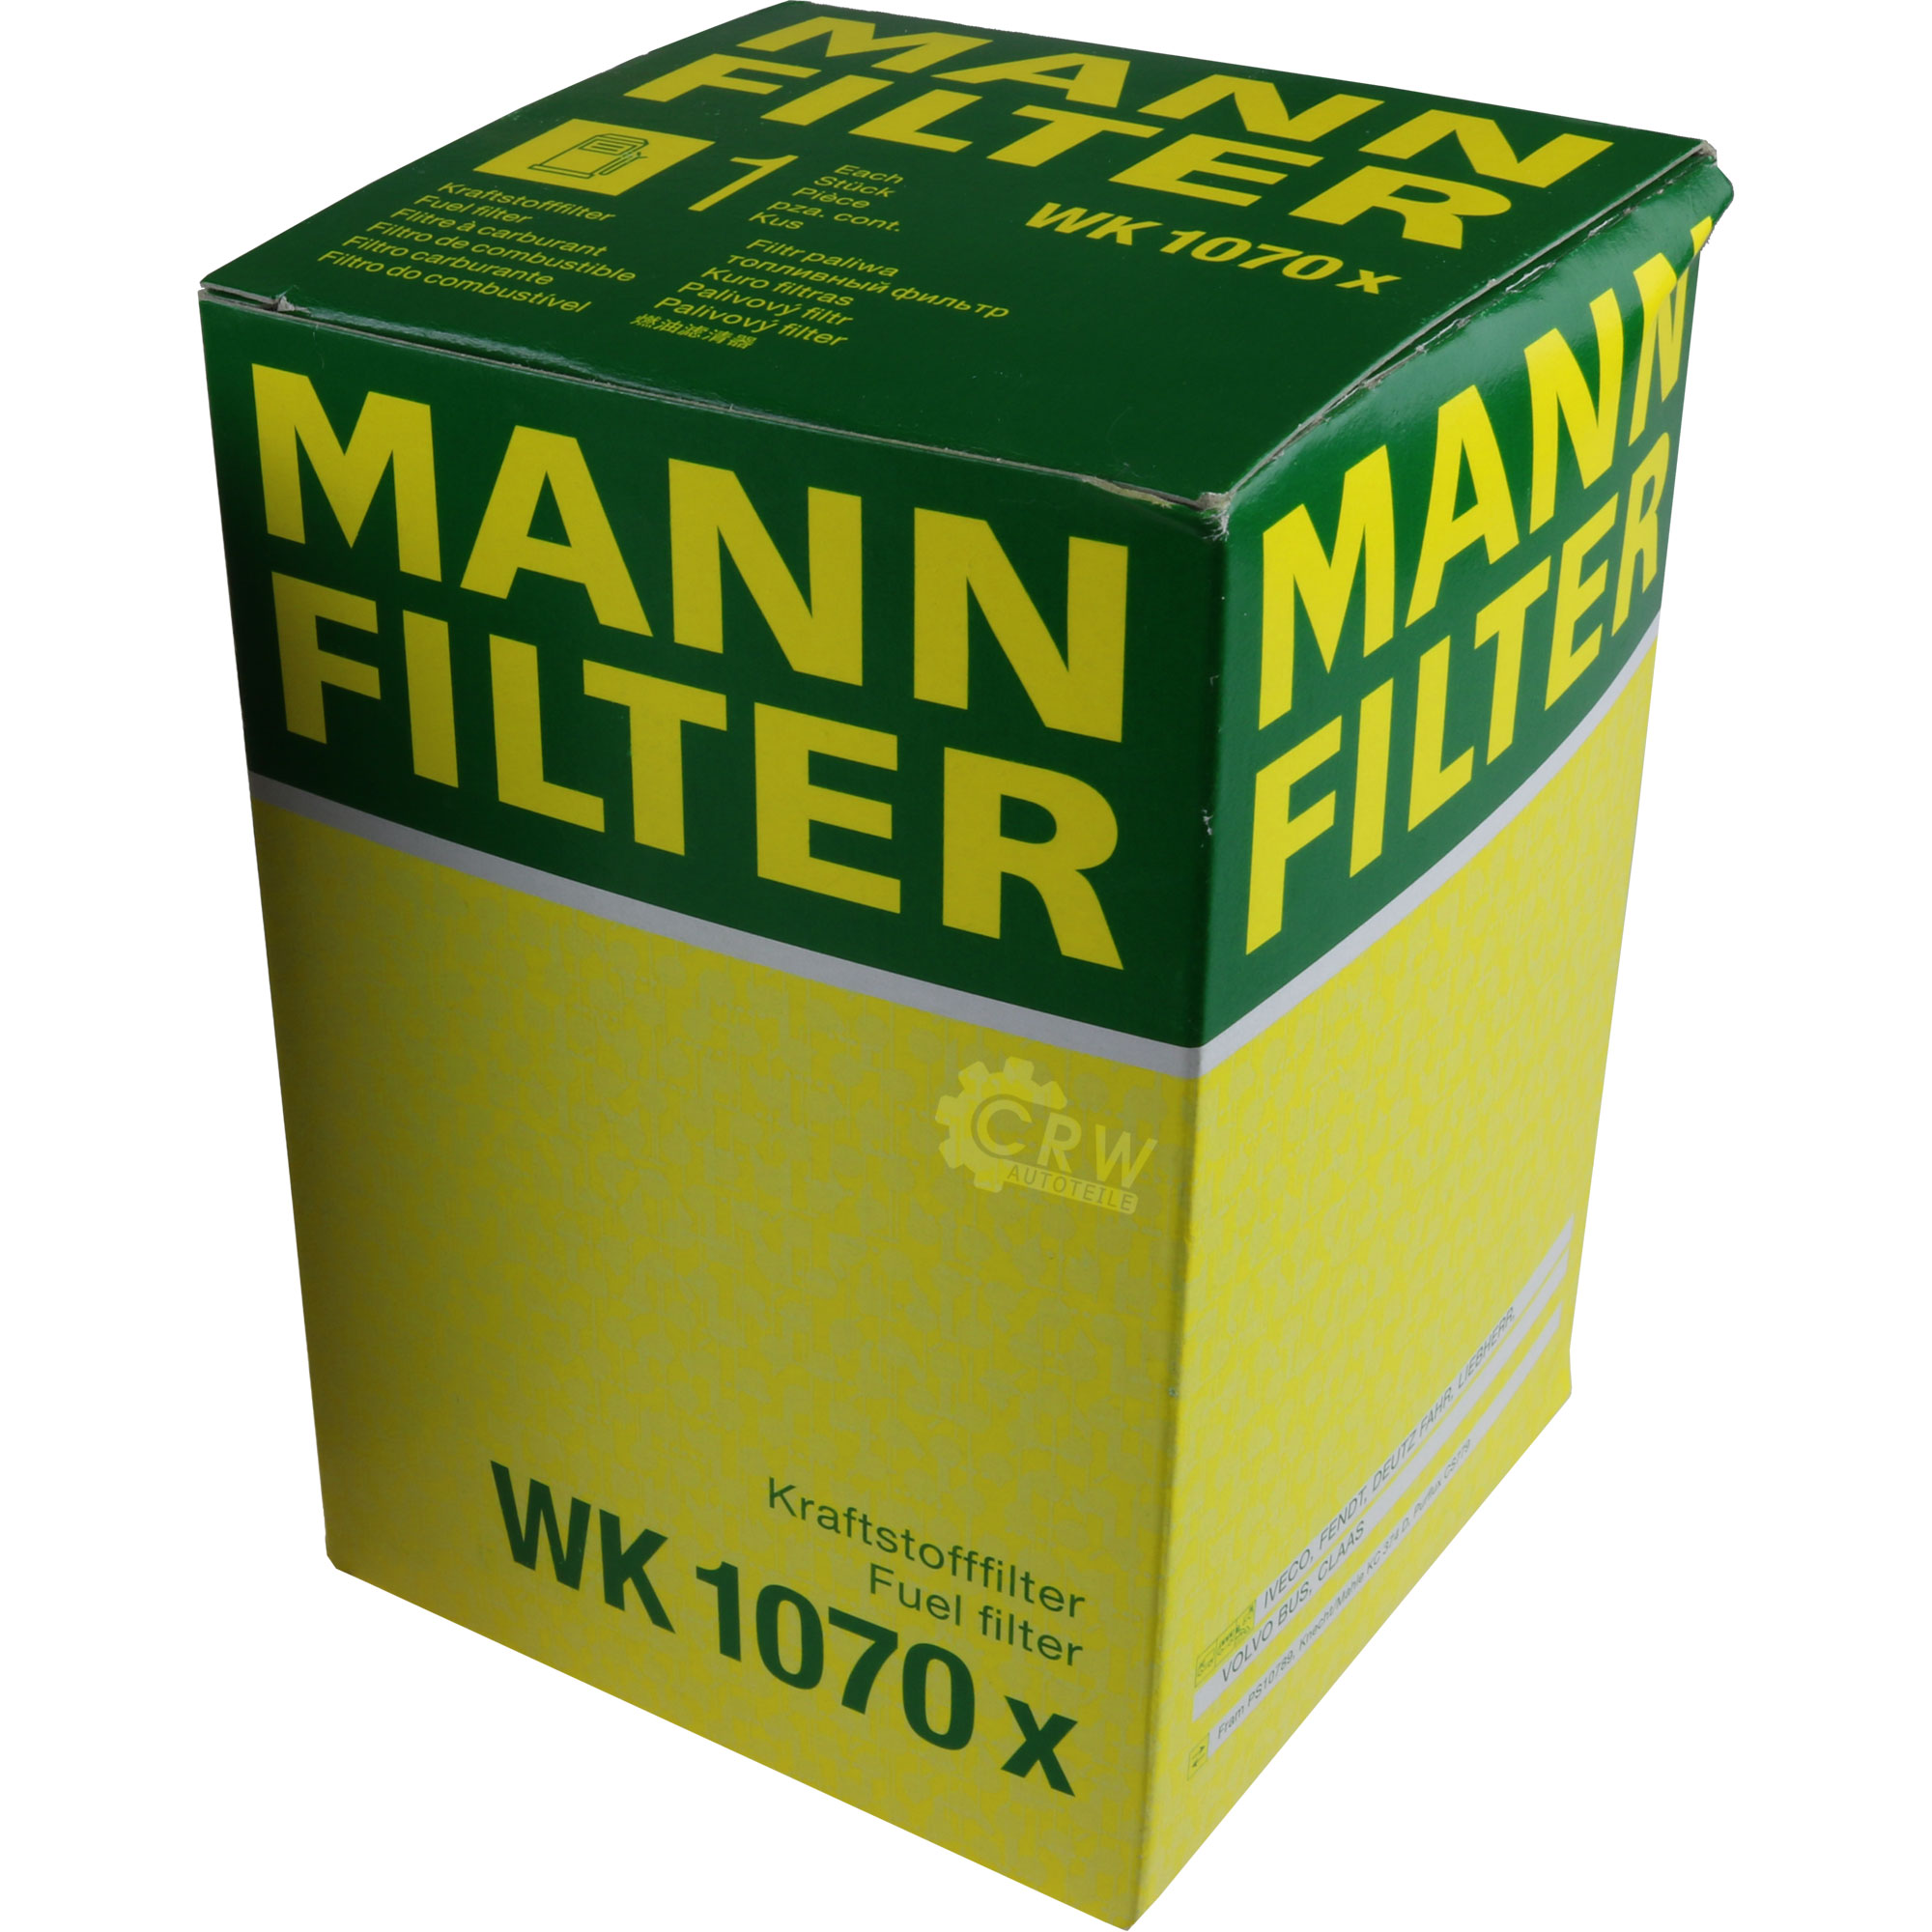 MANN Kraftstofffilter WK 1070 x Fuel Filter